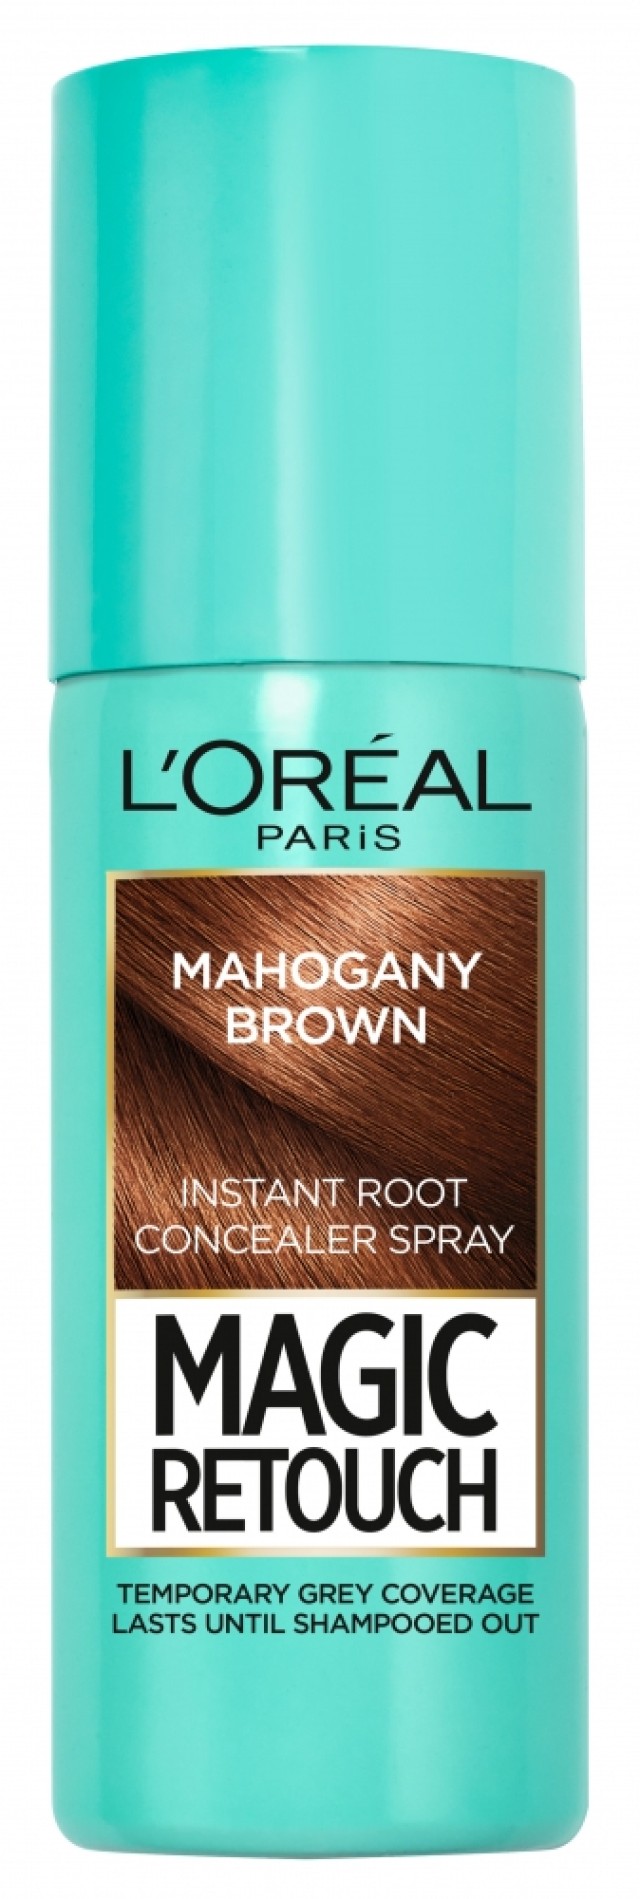 L'Oreal Paris Magic Retouch Instant Root Concealer Spray 6 Mahogany Brown 75ml